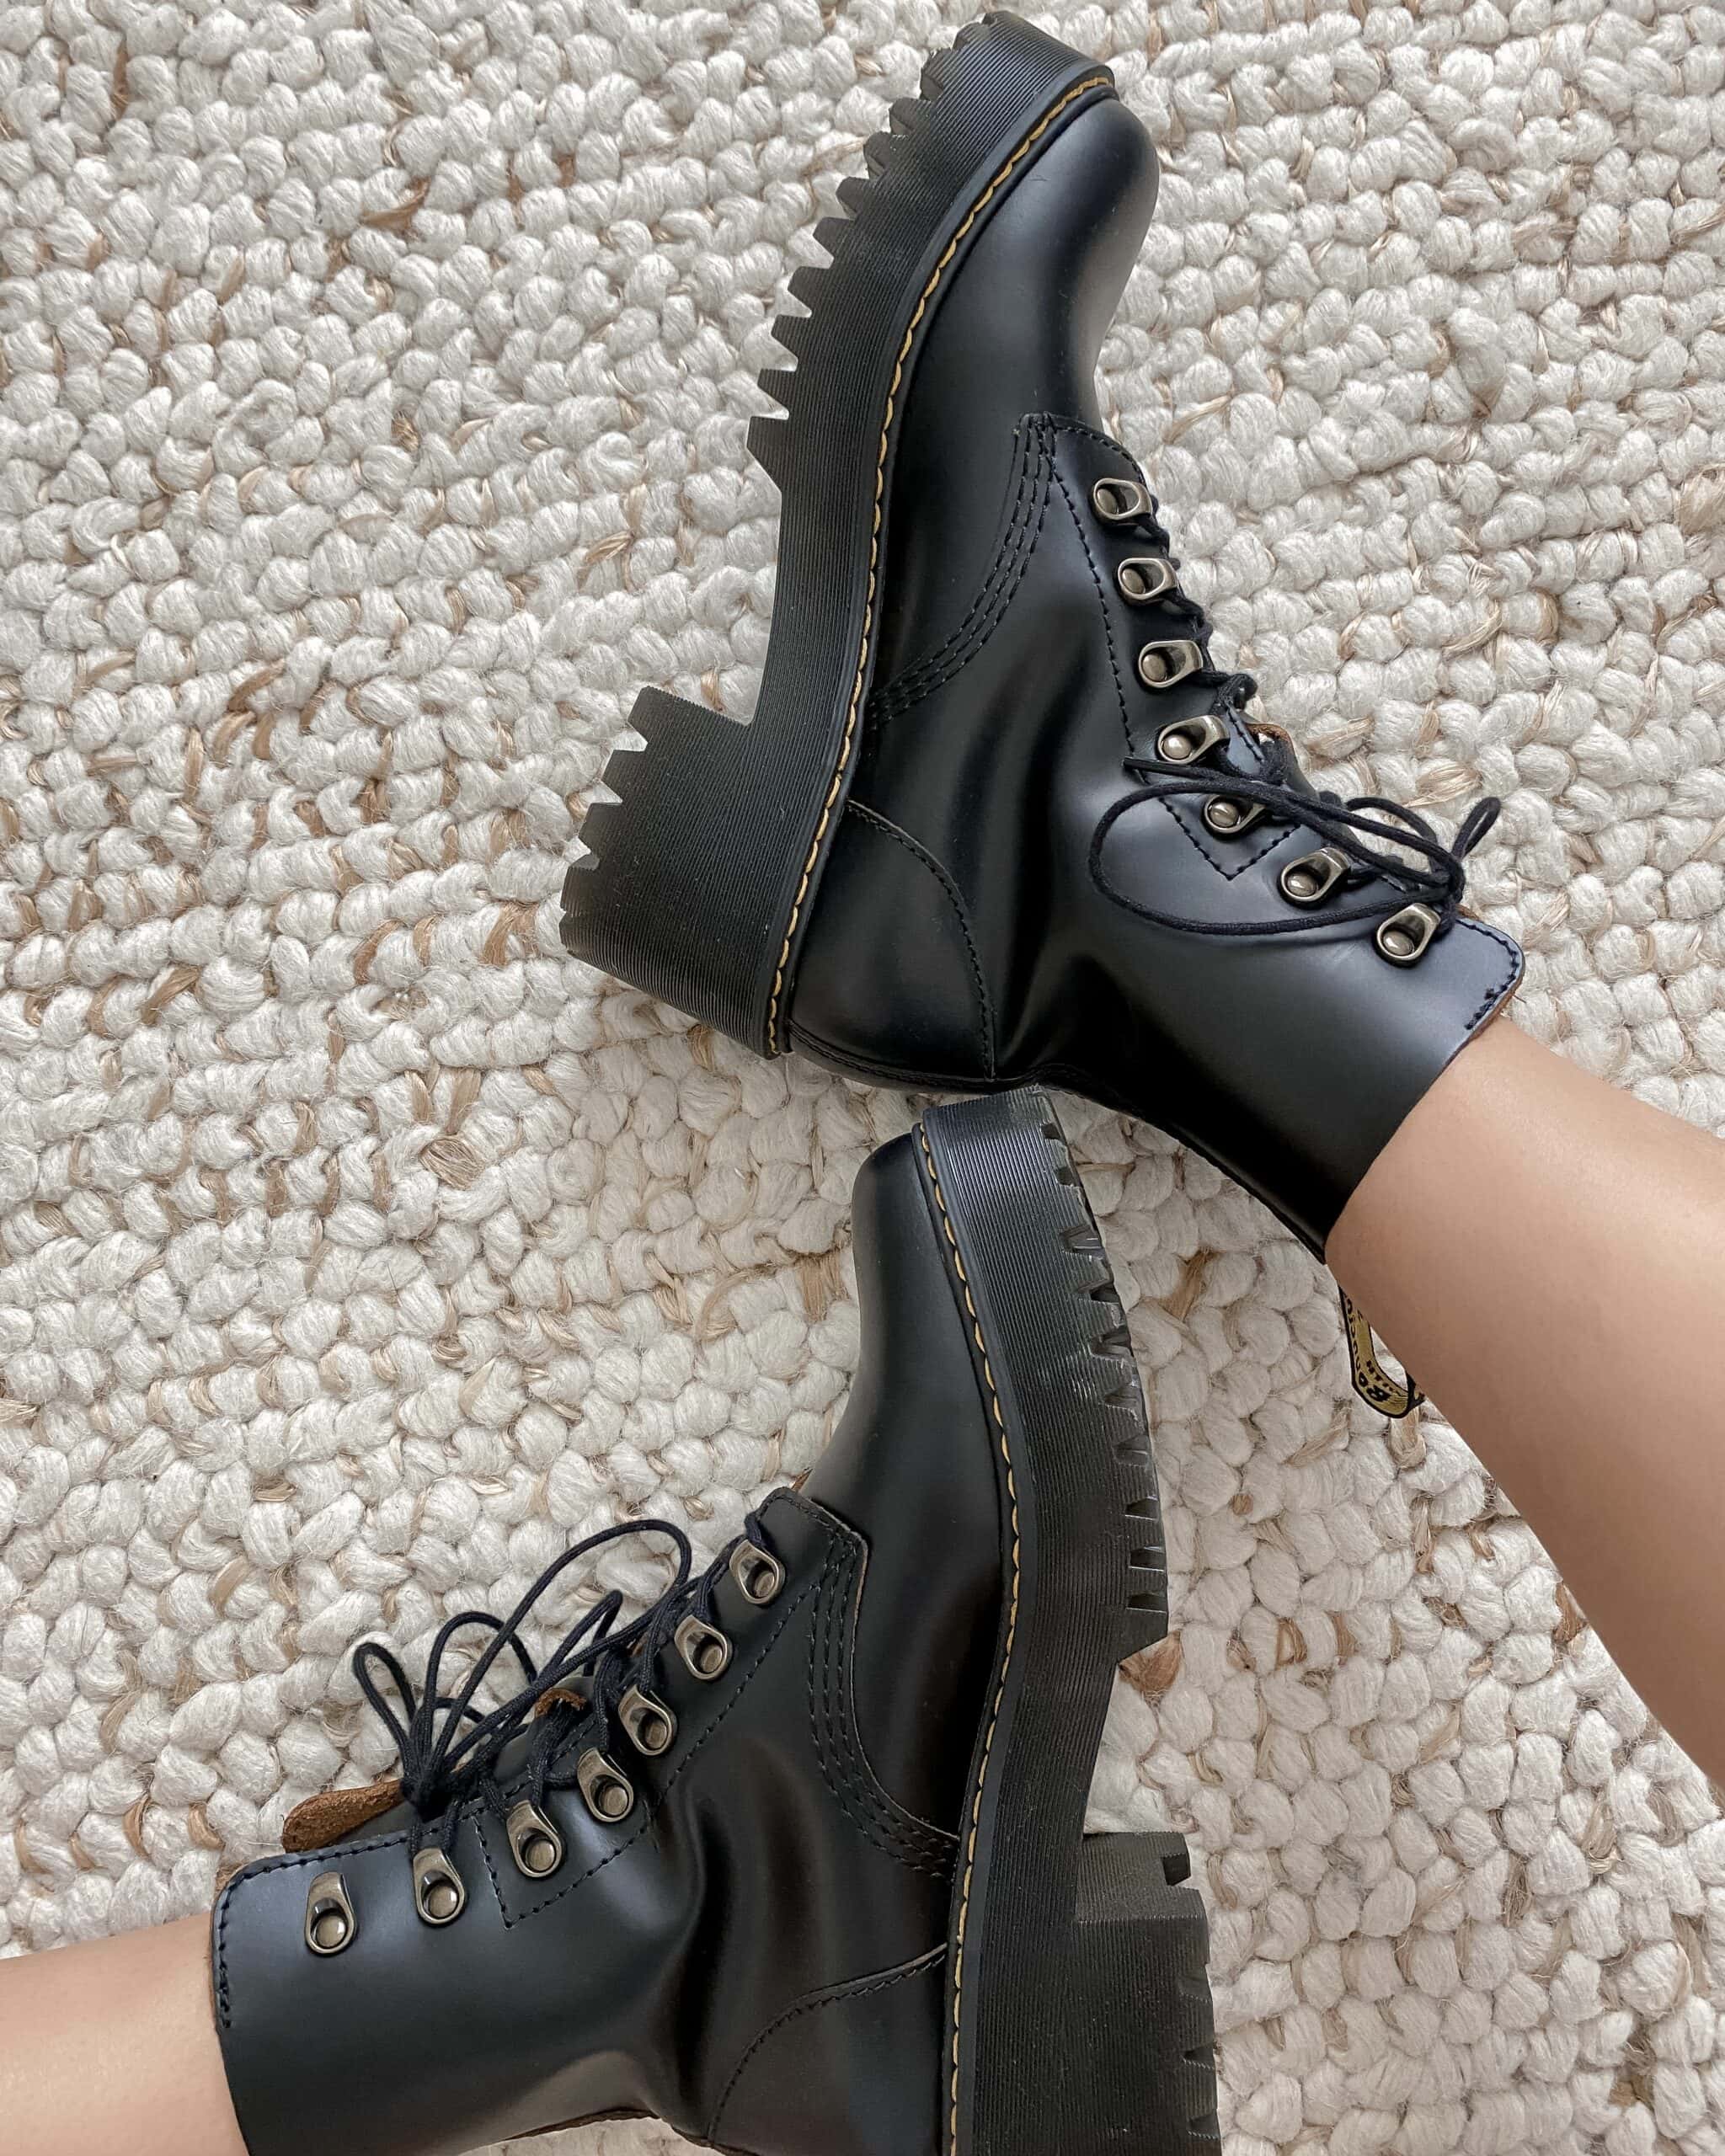 Lug sole boots - Fall Fashion Trends 2021